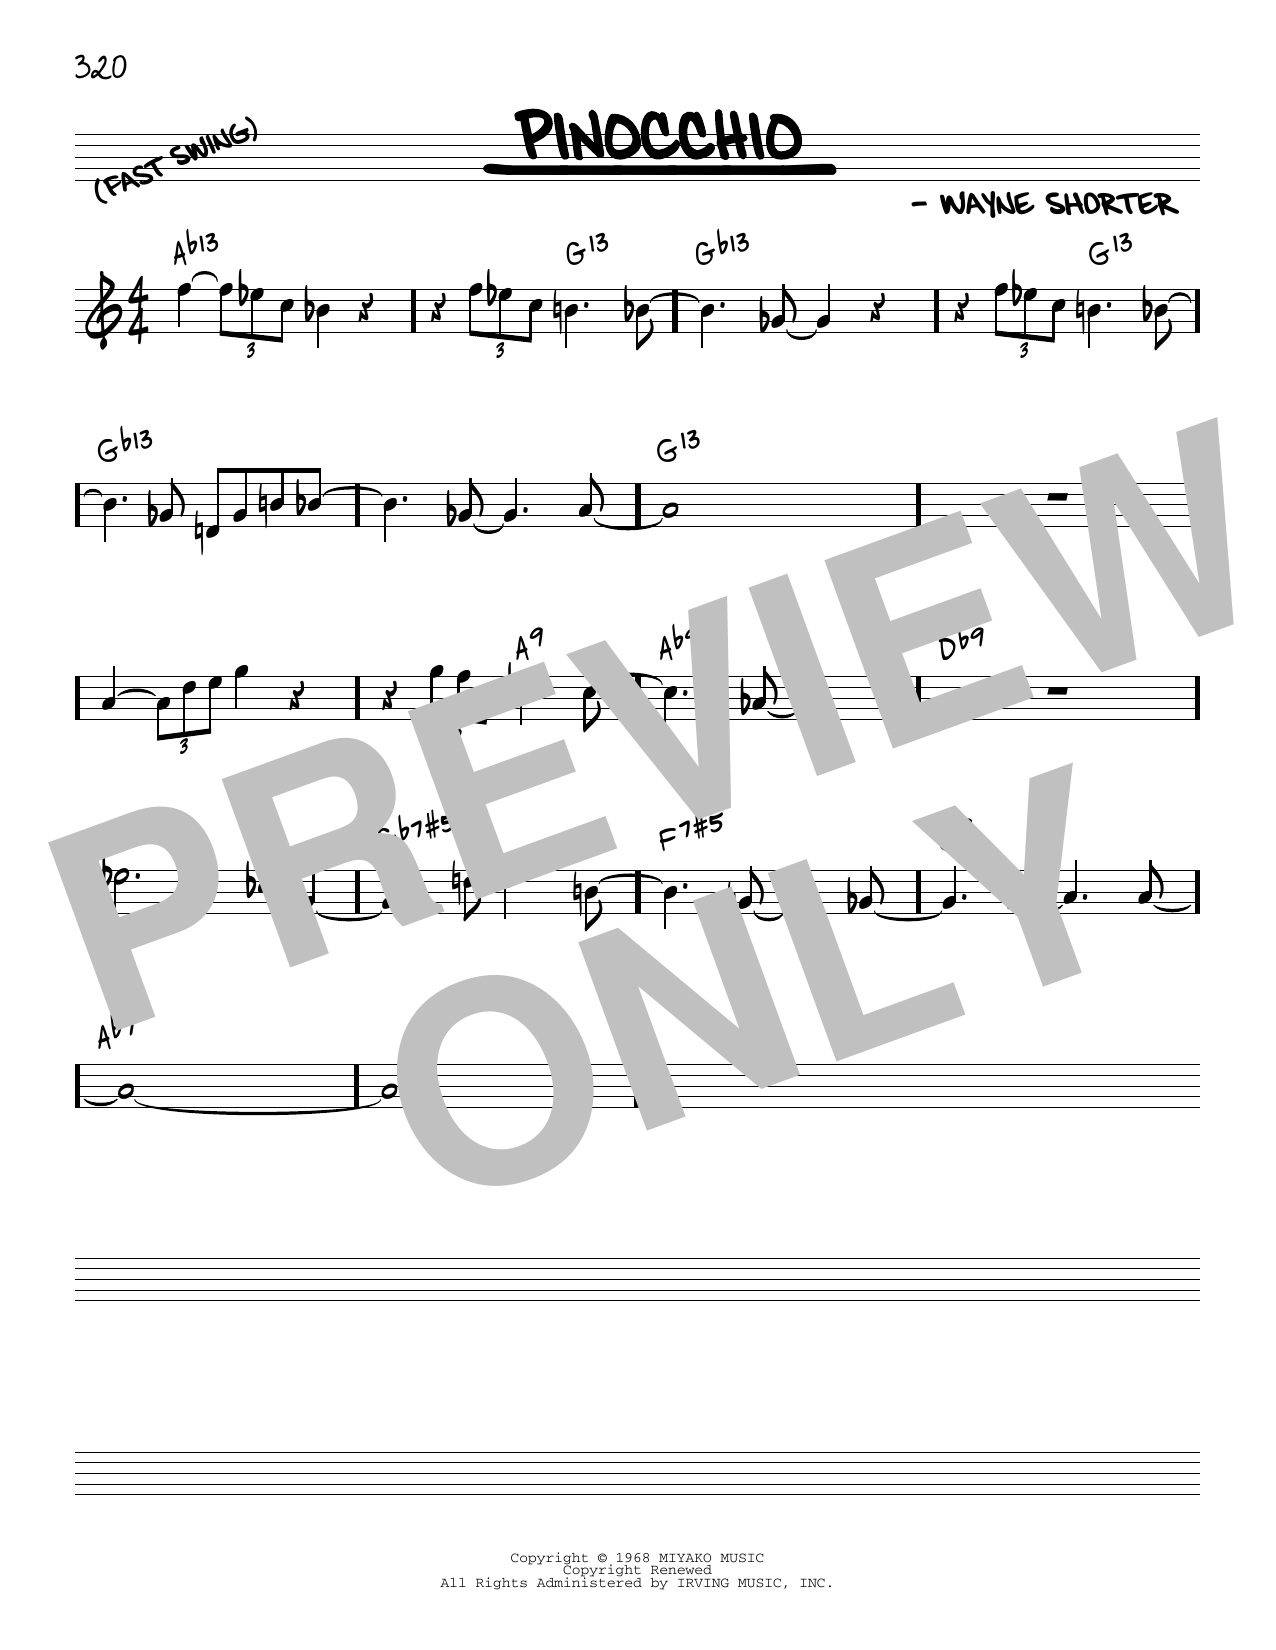 Download Wayne Shorter Pinocchio [Reharmonized version] (arr. Sheet Music